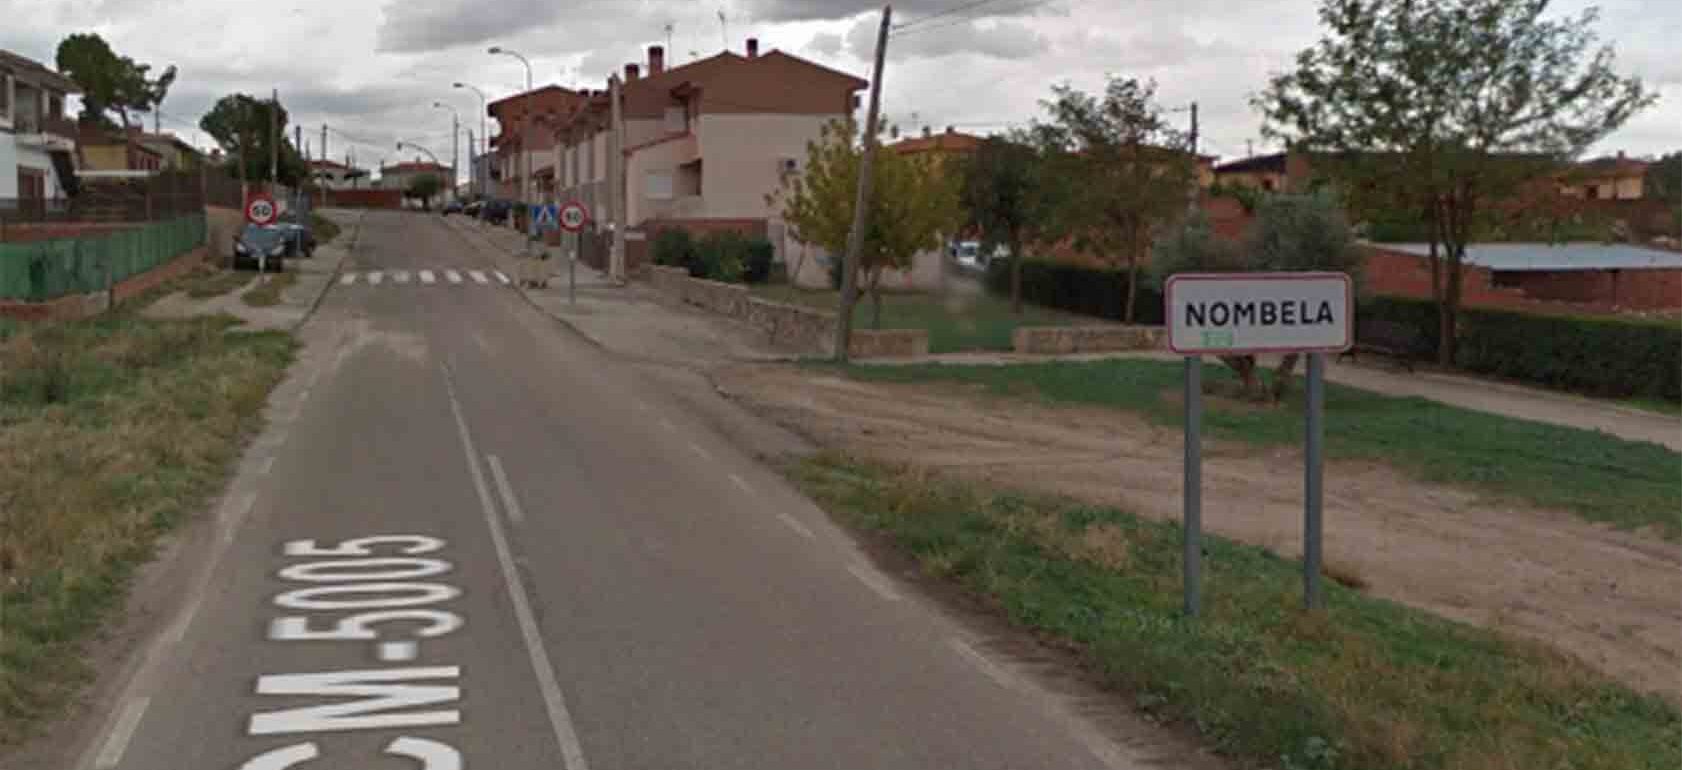 Entrada al municipio de Nombela (Toledo).